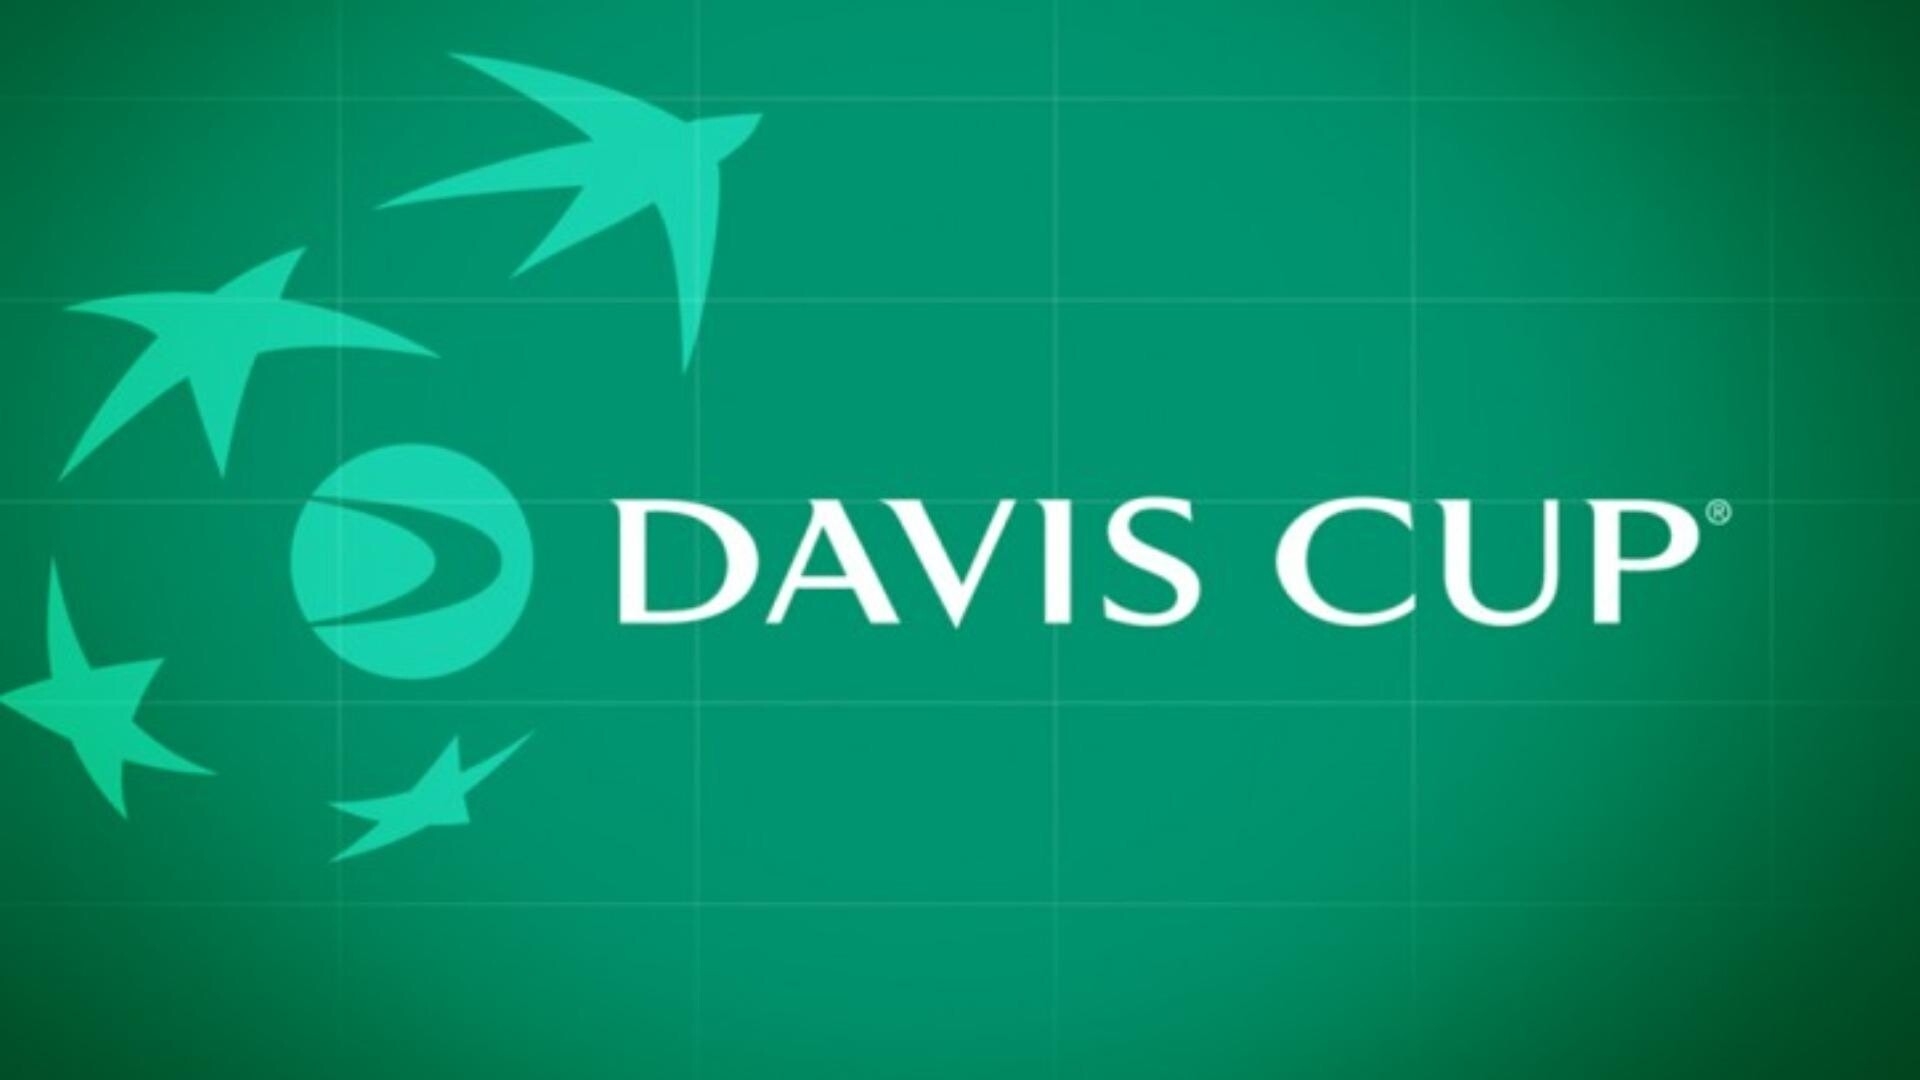 Davis Cup Superfeed